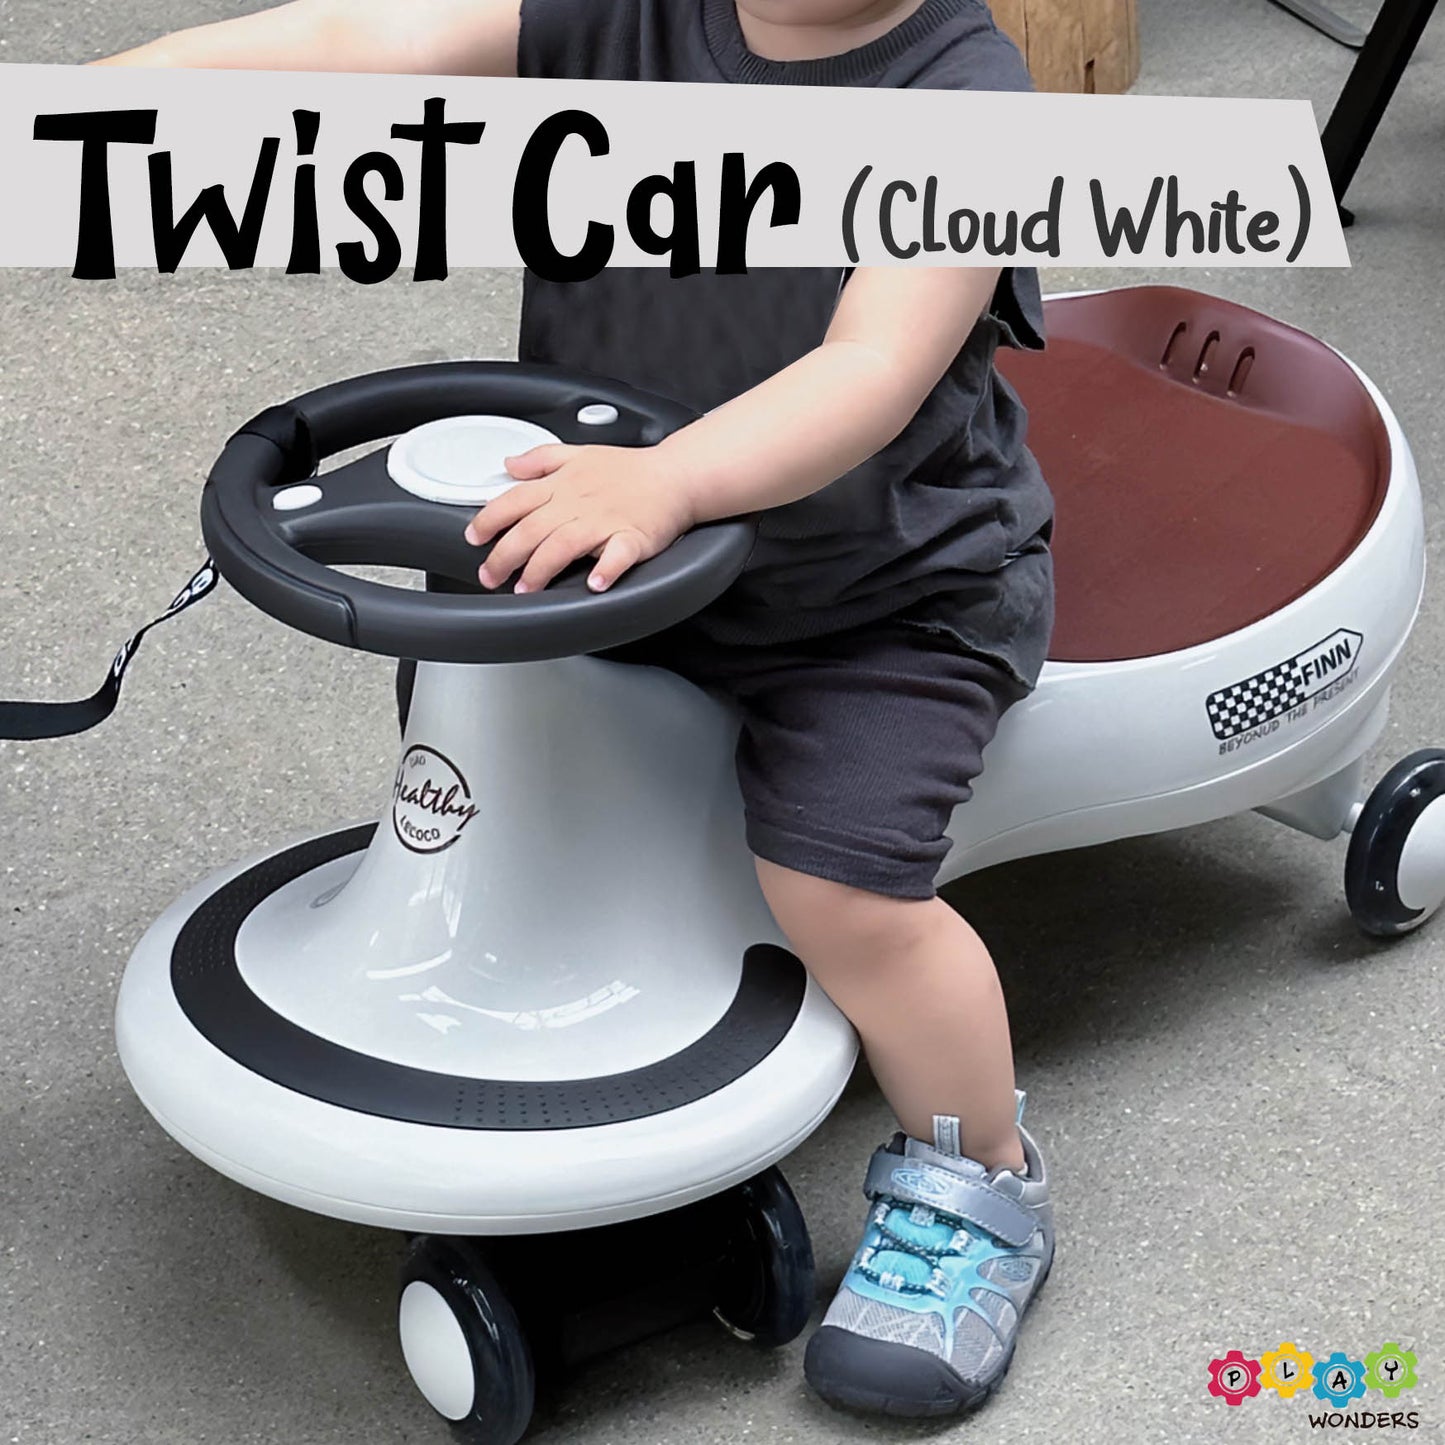 Twist Car